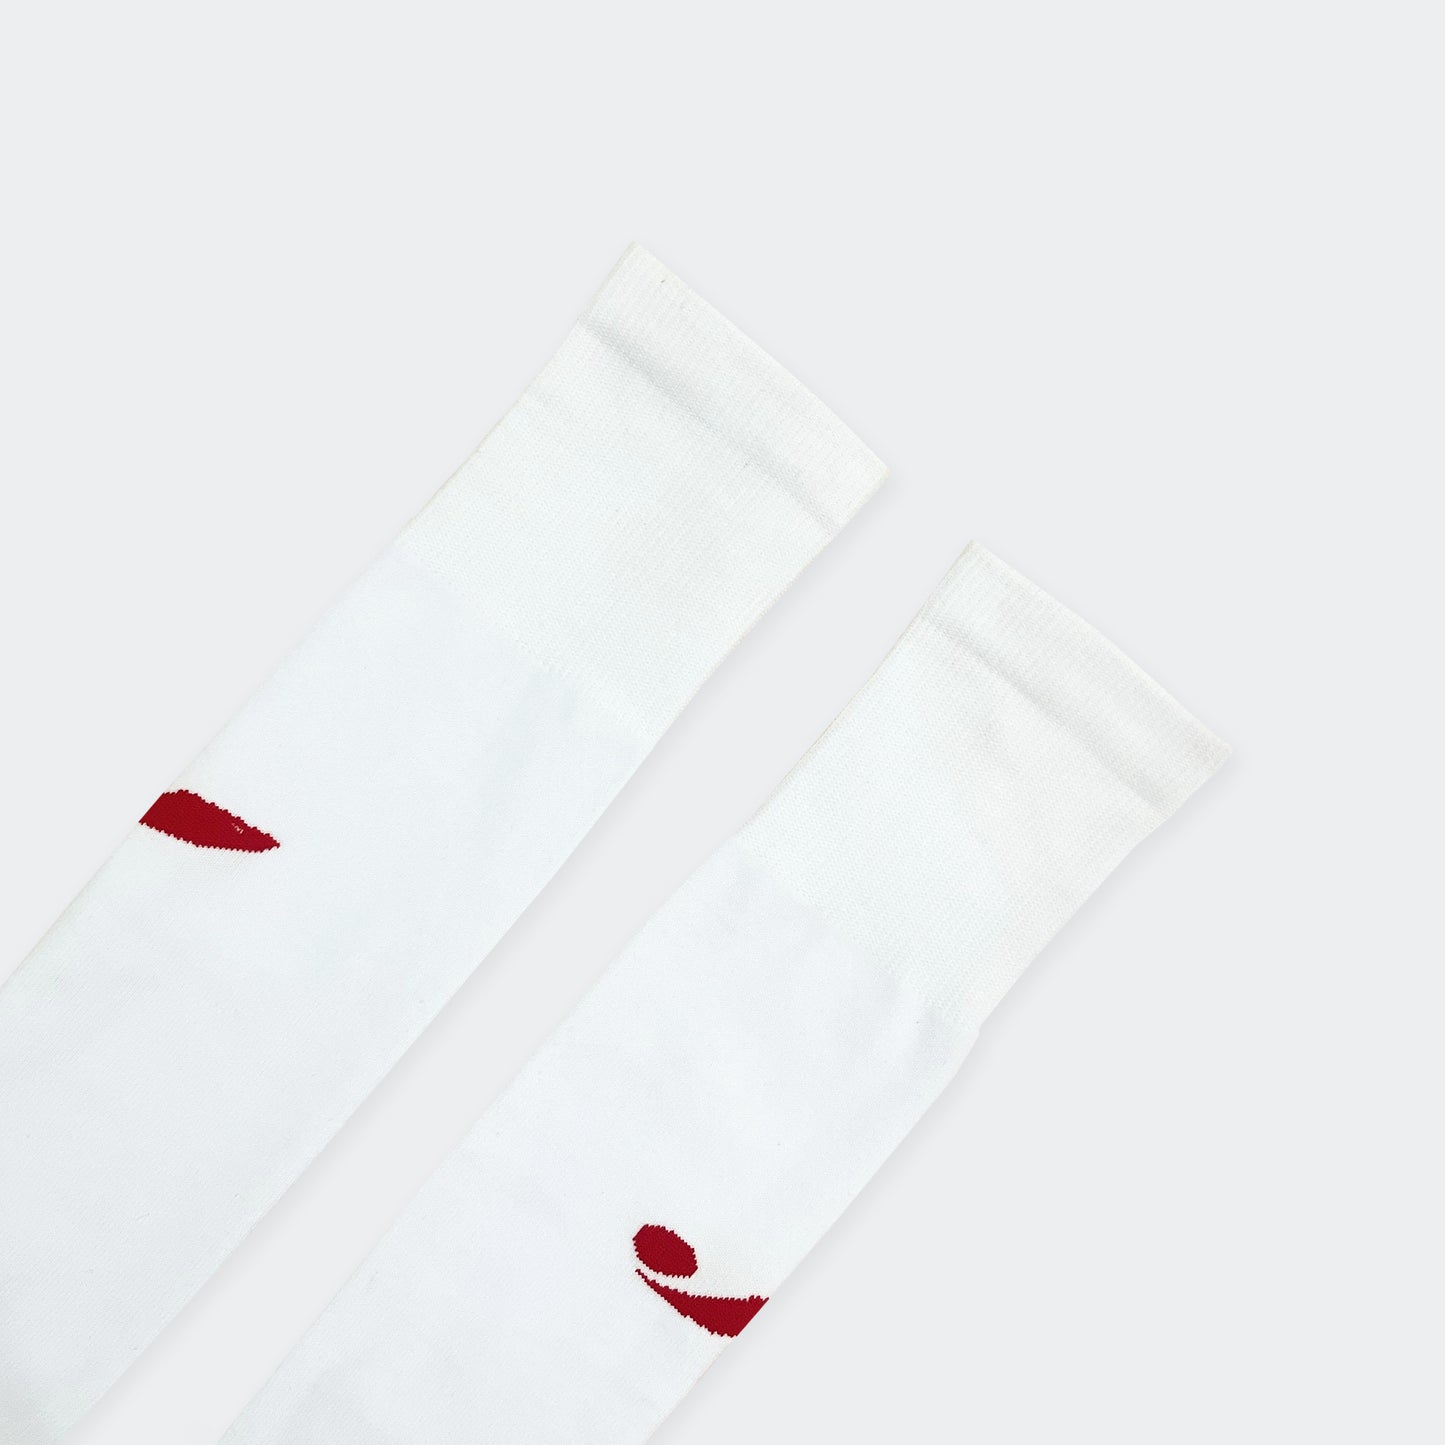 Concave Soccer Socks - White/Red